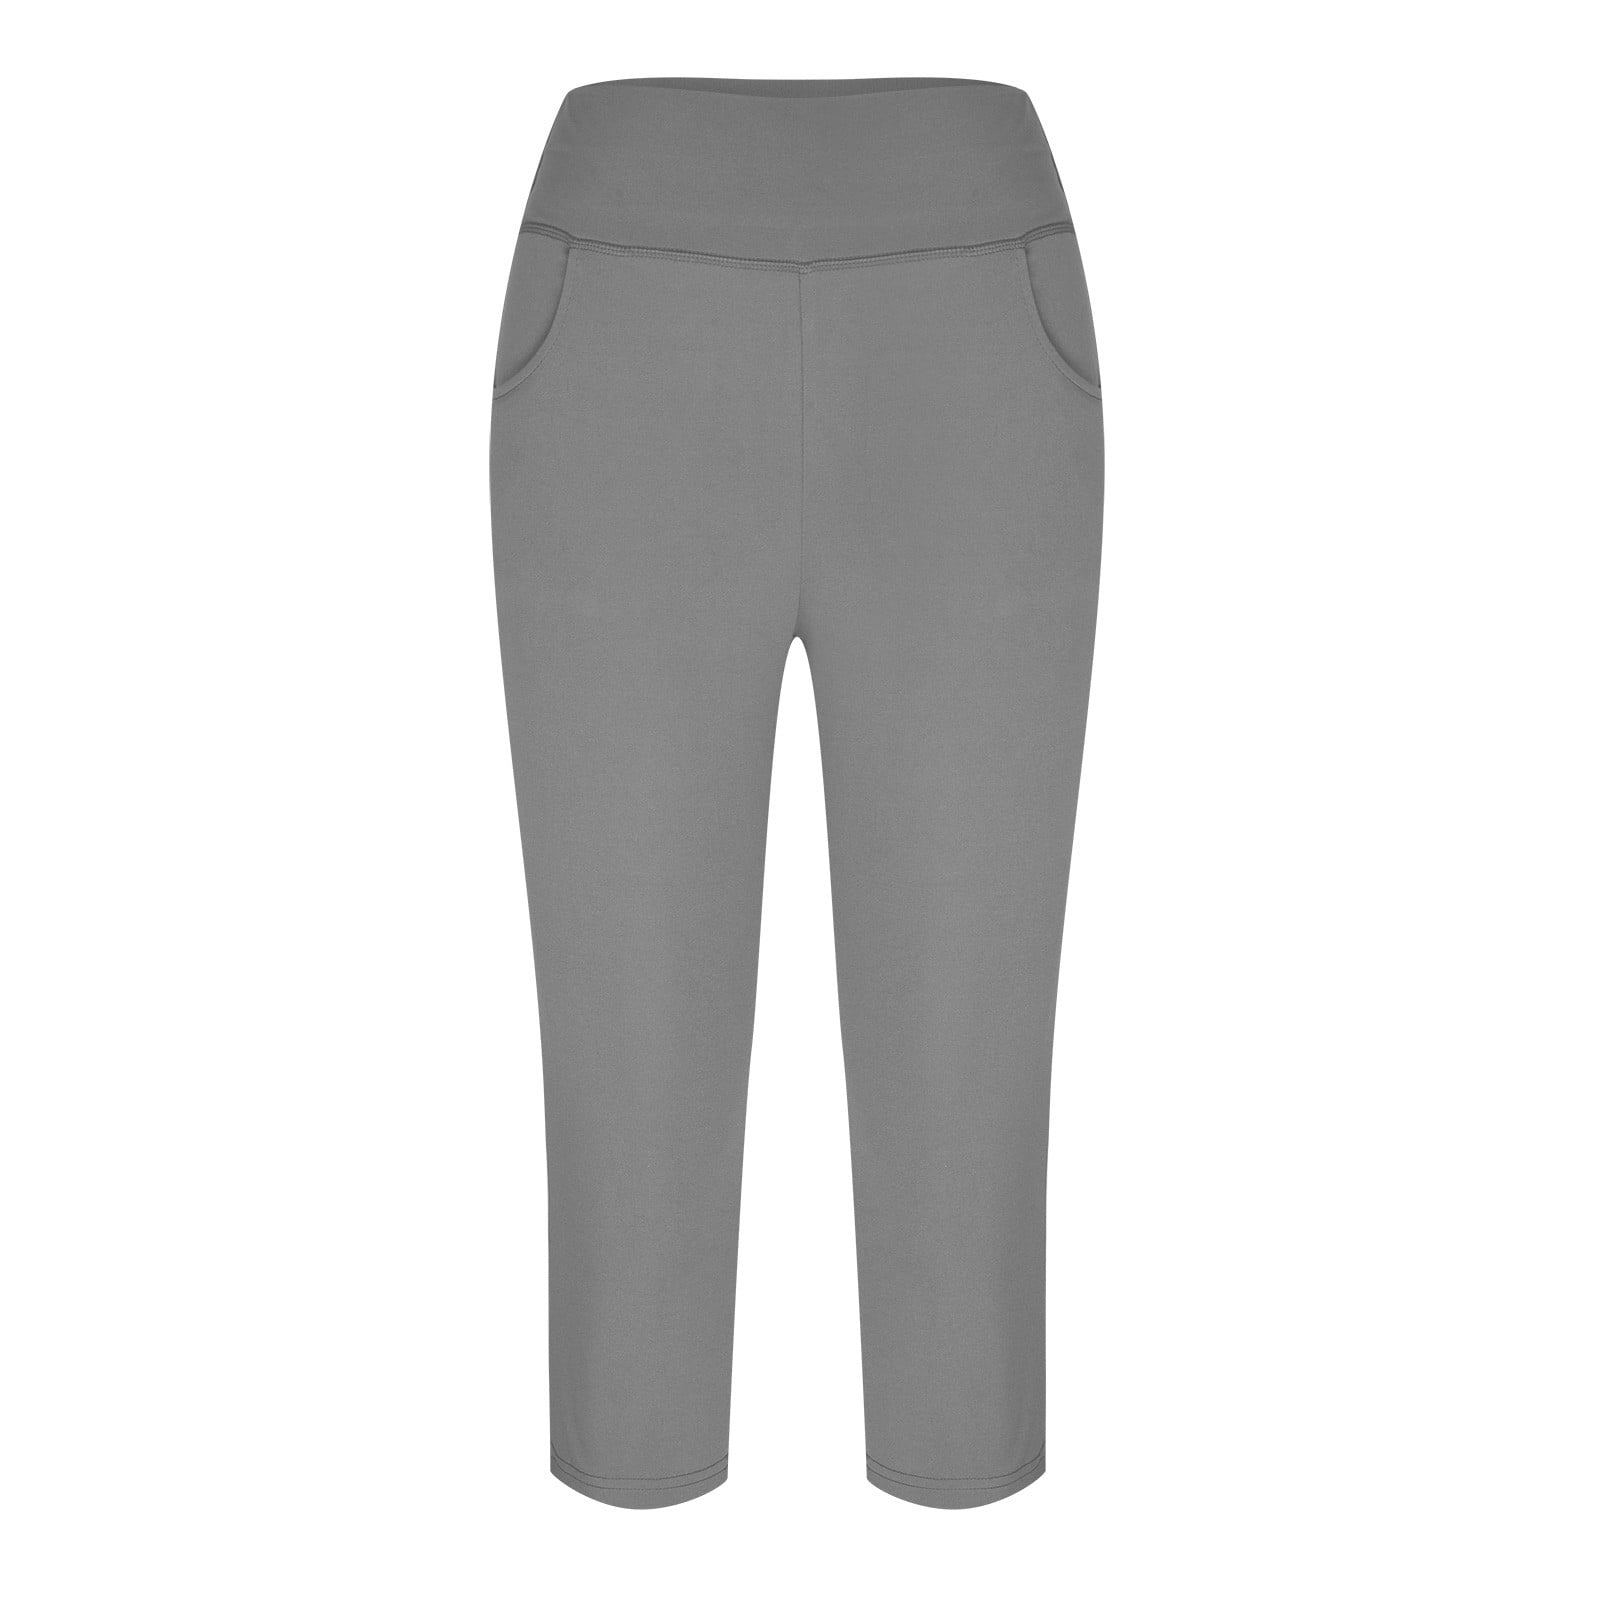 Zpanxa Capris for Women Casual Summer High Waisted Workout Yoga Pants  Lightweight Knee Length Capri Leggings with Pockets Gray XL 